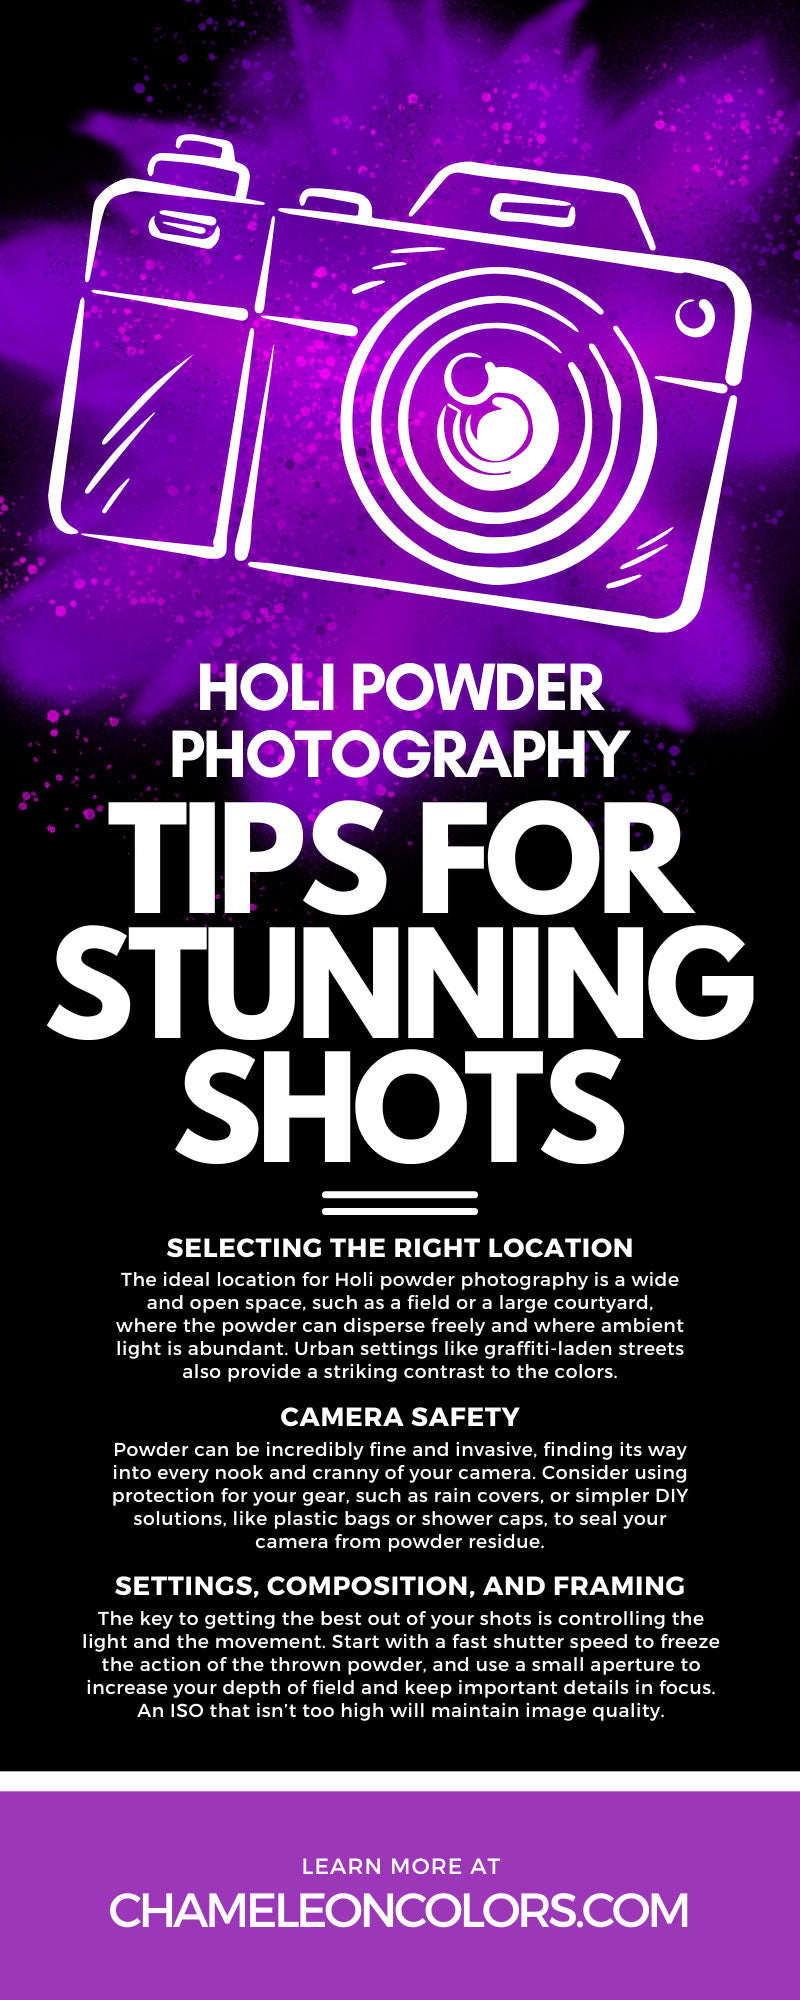 Holi Powder Photography Tips for Stunning Shots